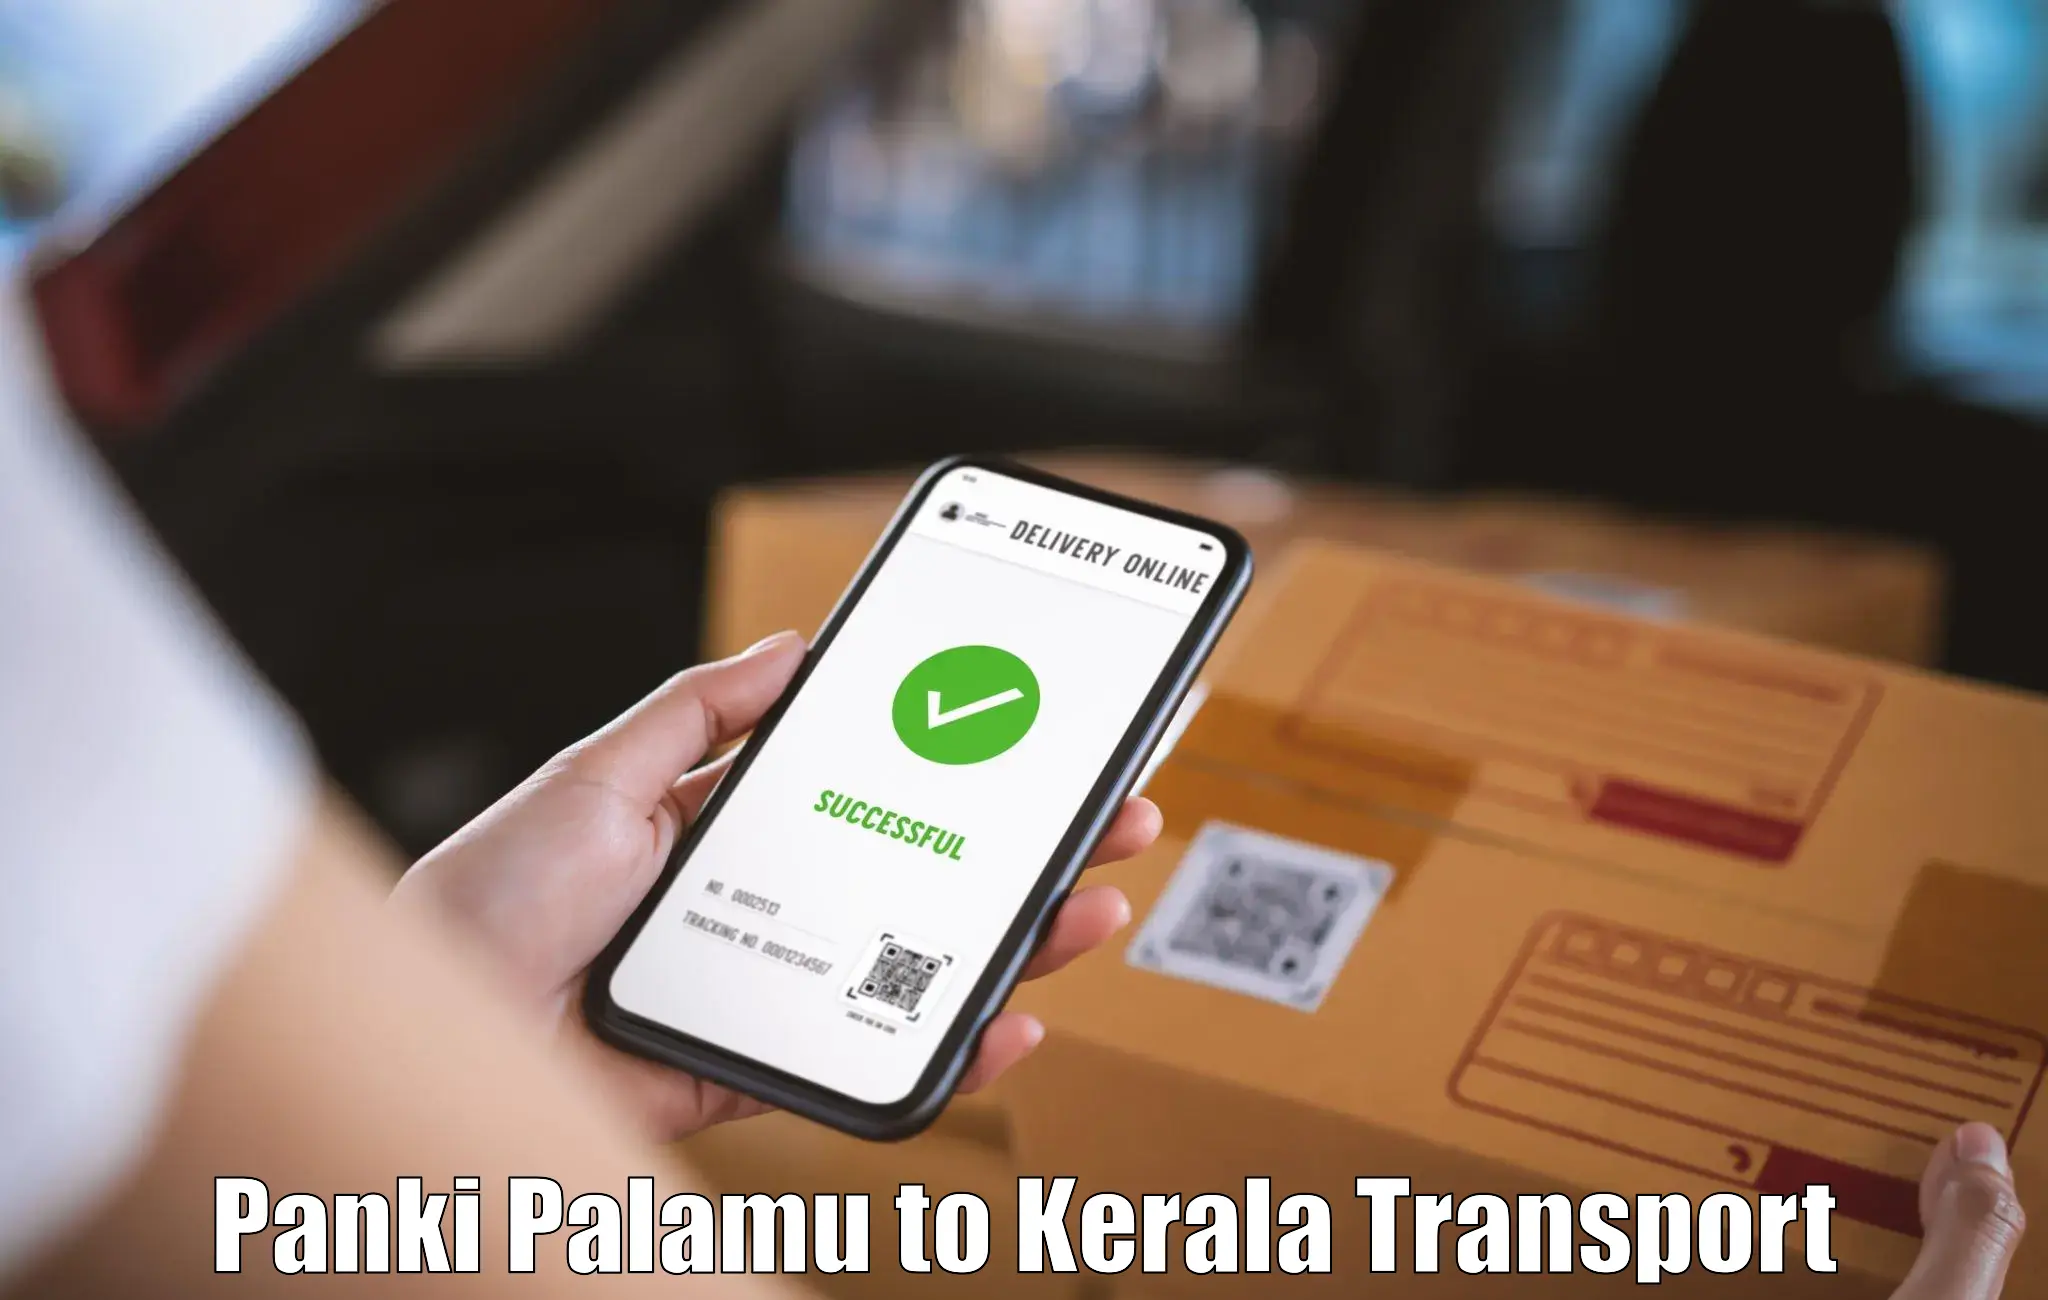 Commercial transport service Panki Palamu to Kerala